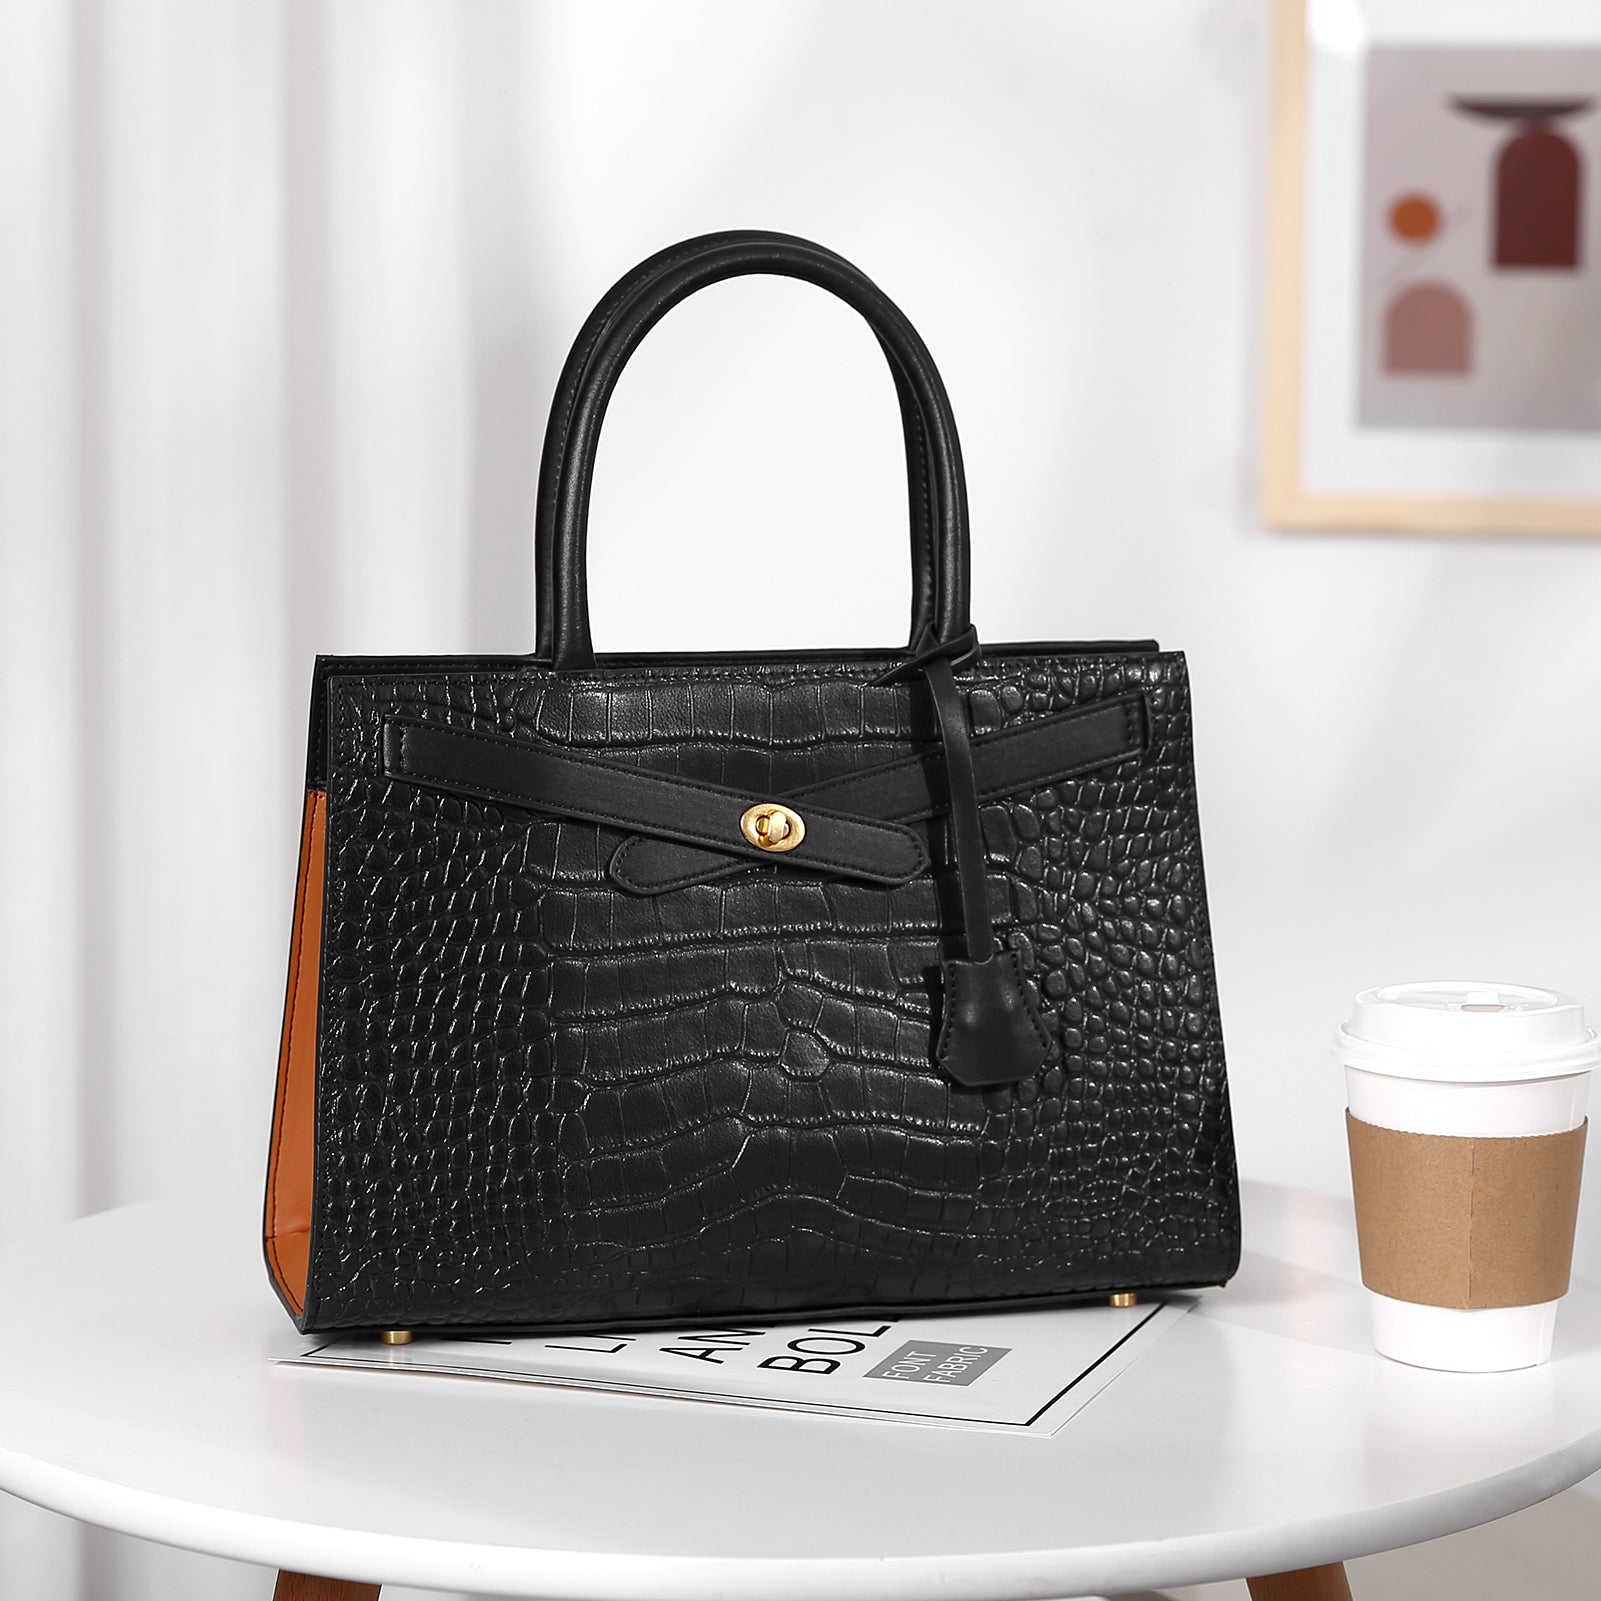 BOSTANTEN Leather Handbags for Women Fashion Satchel Purses Top Handle